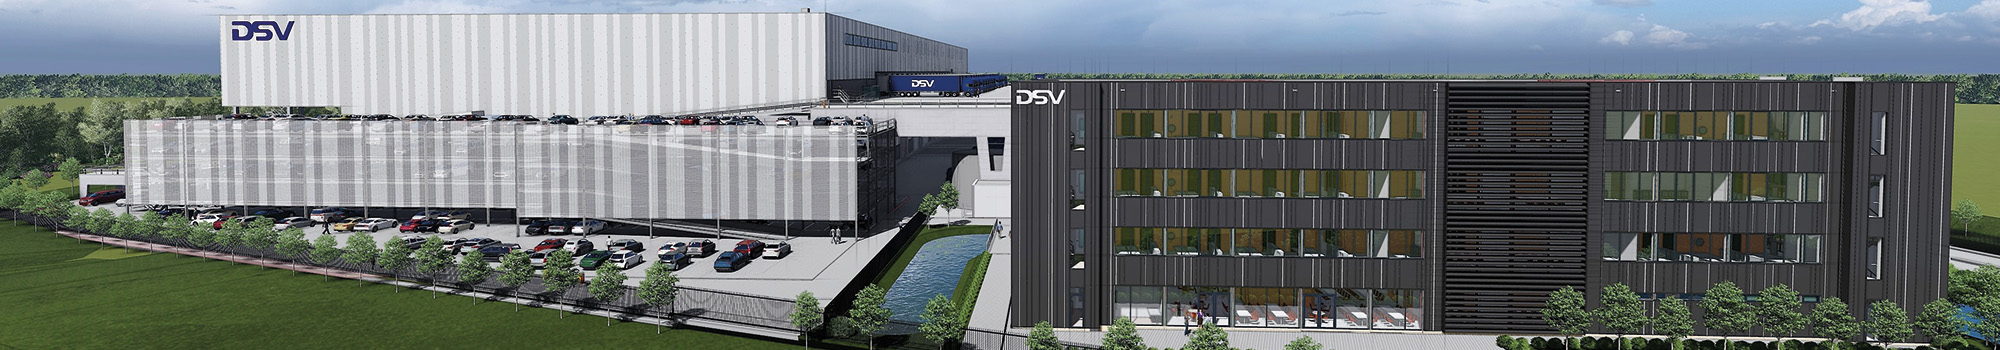 Project 'DSV Venlo 5' van Unibouw